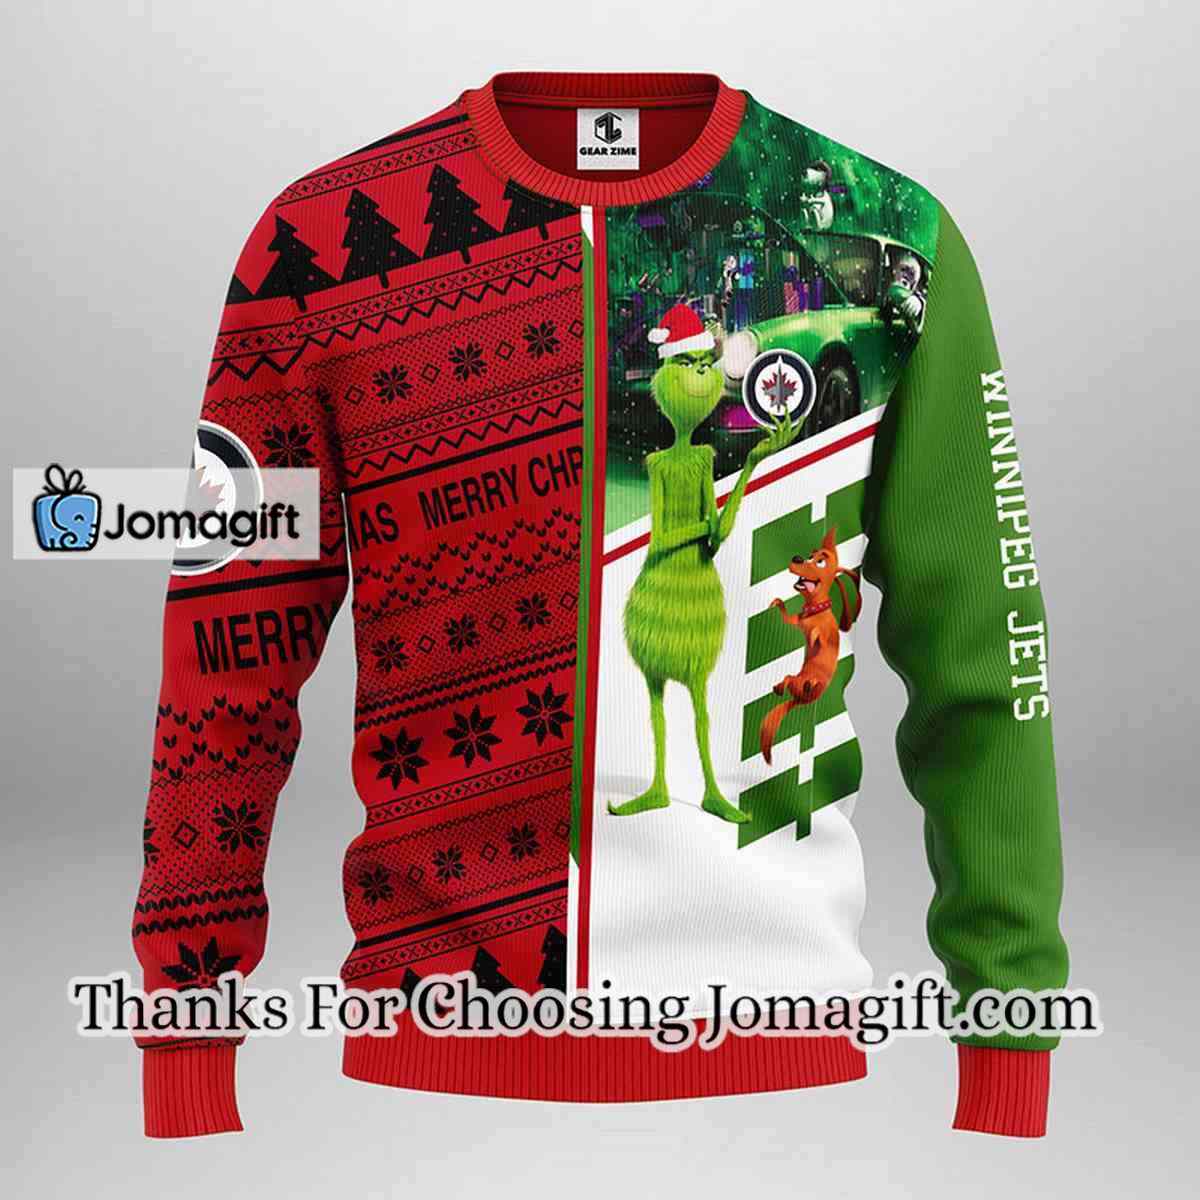 MLB Los Angeles Dodgers Grateful Dead Ugly Christmas Fleece Sweater For Fans